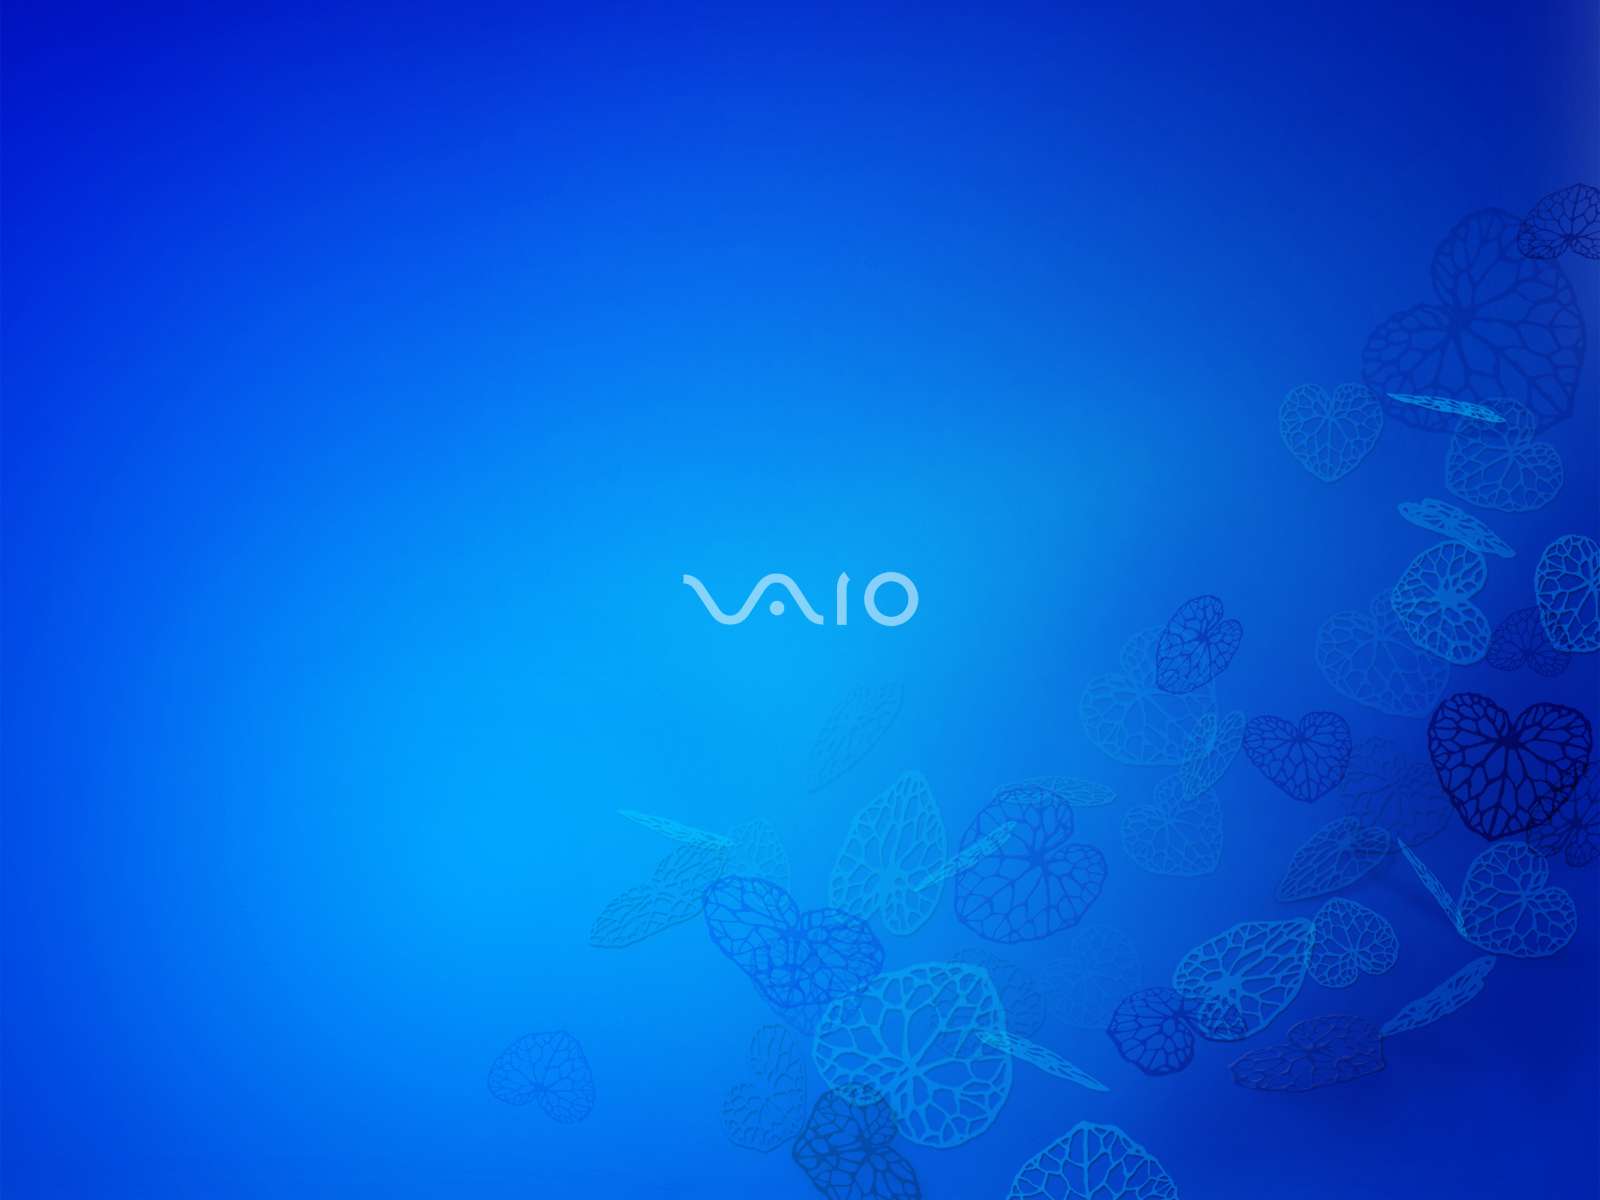 Sony Vaio Wallpapers 1600x10 Wallpaper Teahub Io